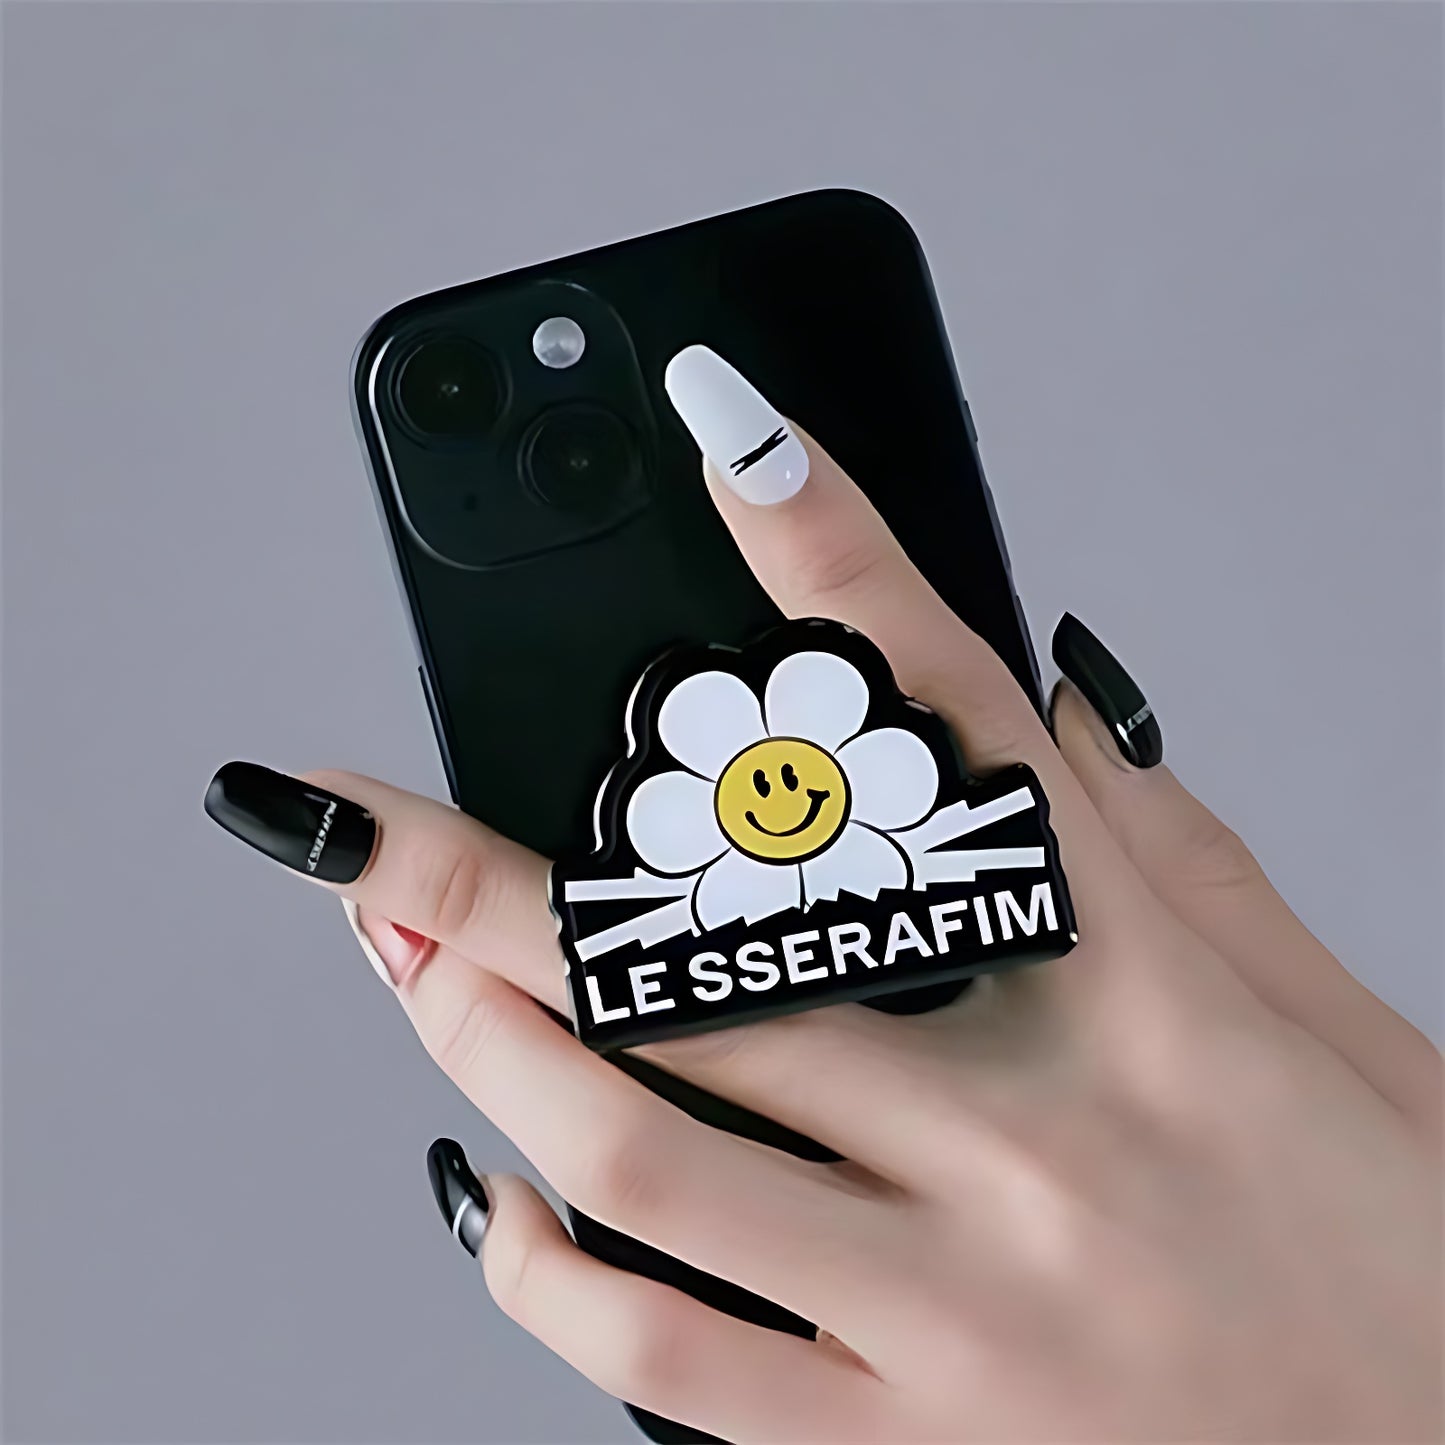 Le Sserafim Popsocket Phone Grip